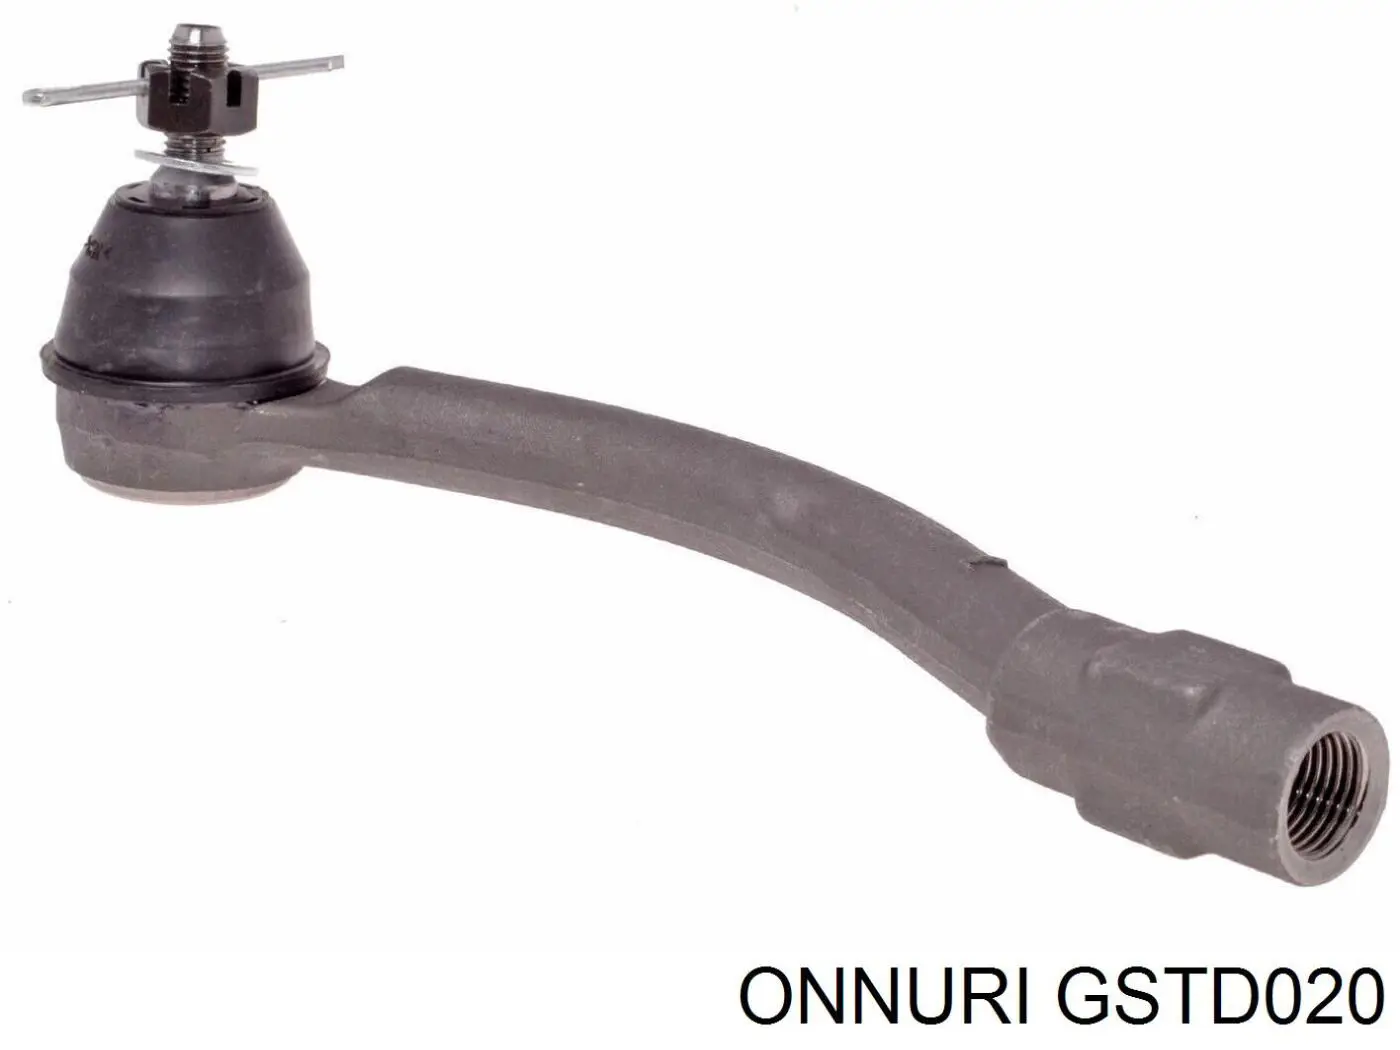 GSTD020 Onnuri rótula barra de acoplamiento exterior